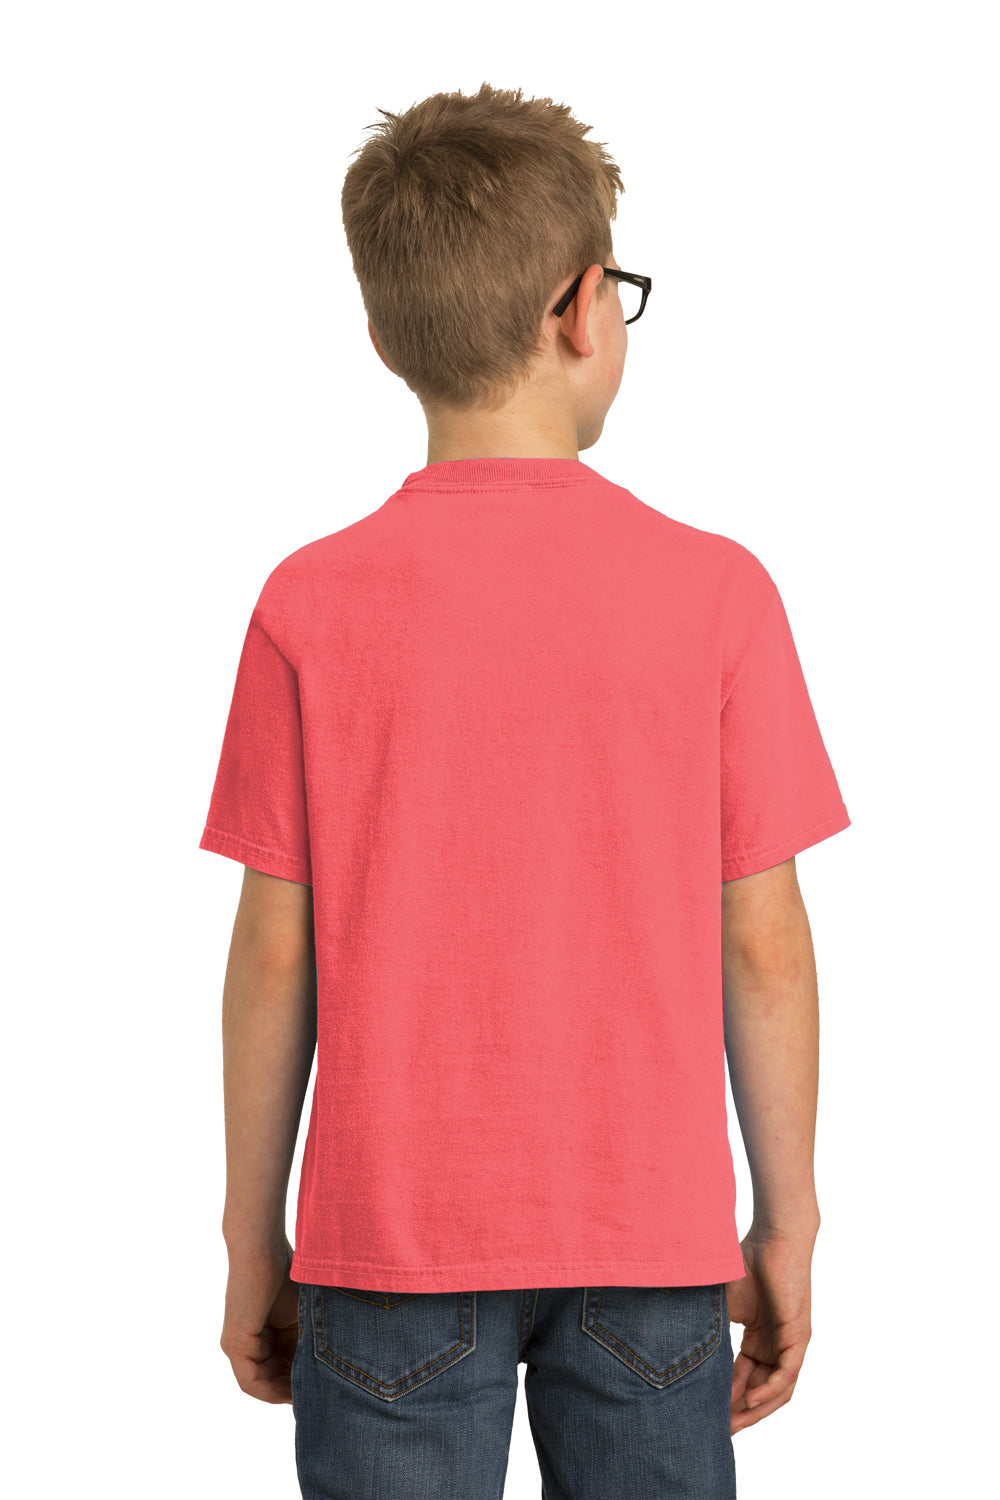 Port & Company Youth Beach Wash Short Sleeve Crewneck T-Shirt Fruit Punch Pink Back